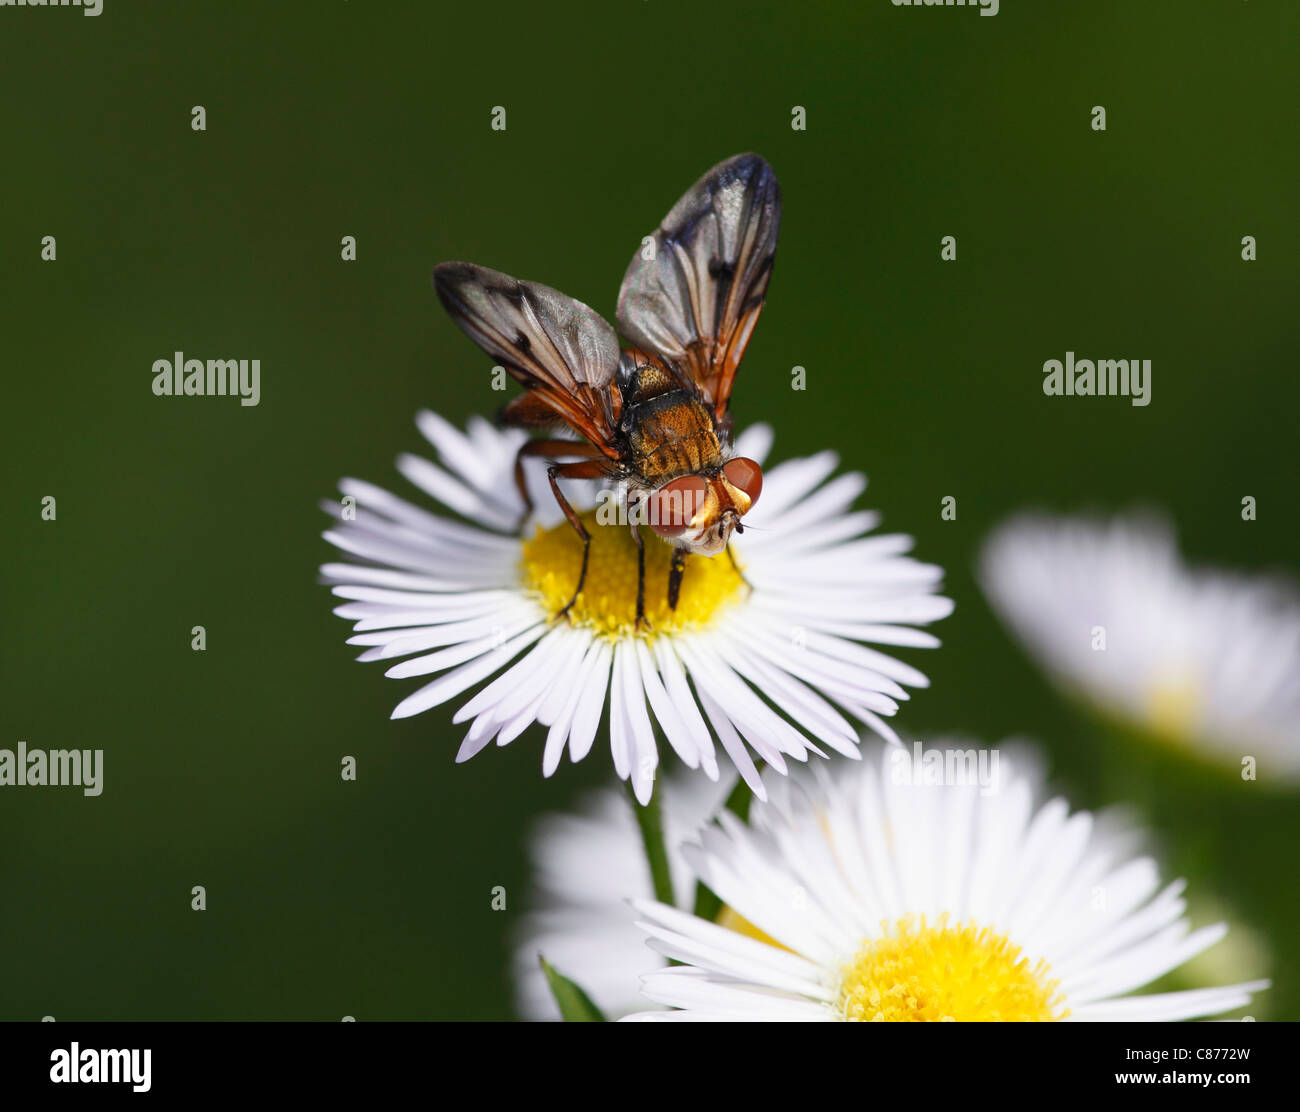 Austria, Wachau, Close up of parasitic fly on annual fleabane Stock Photo